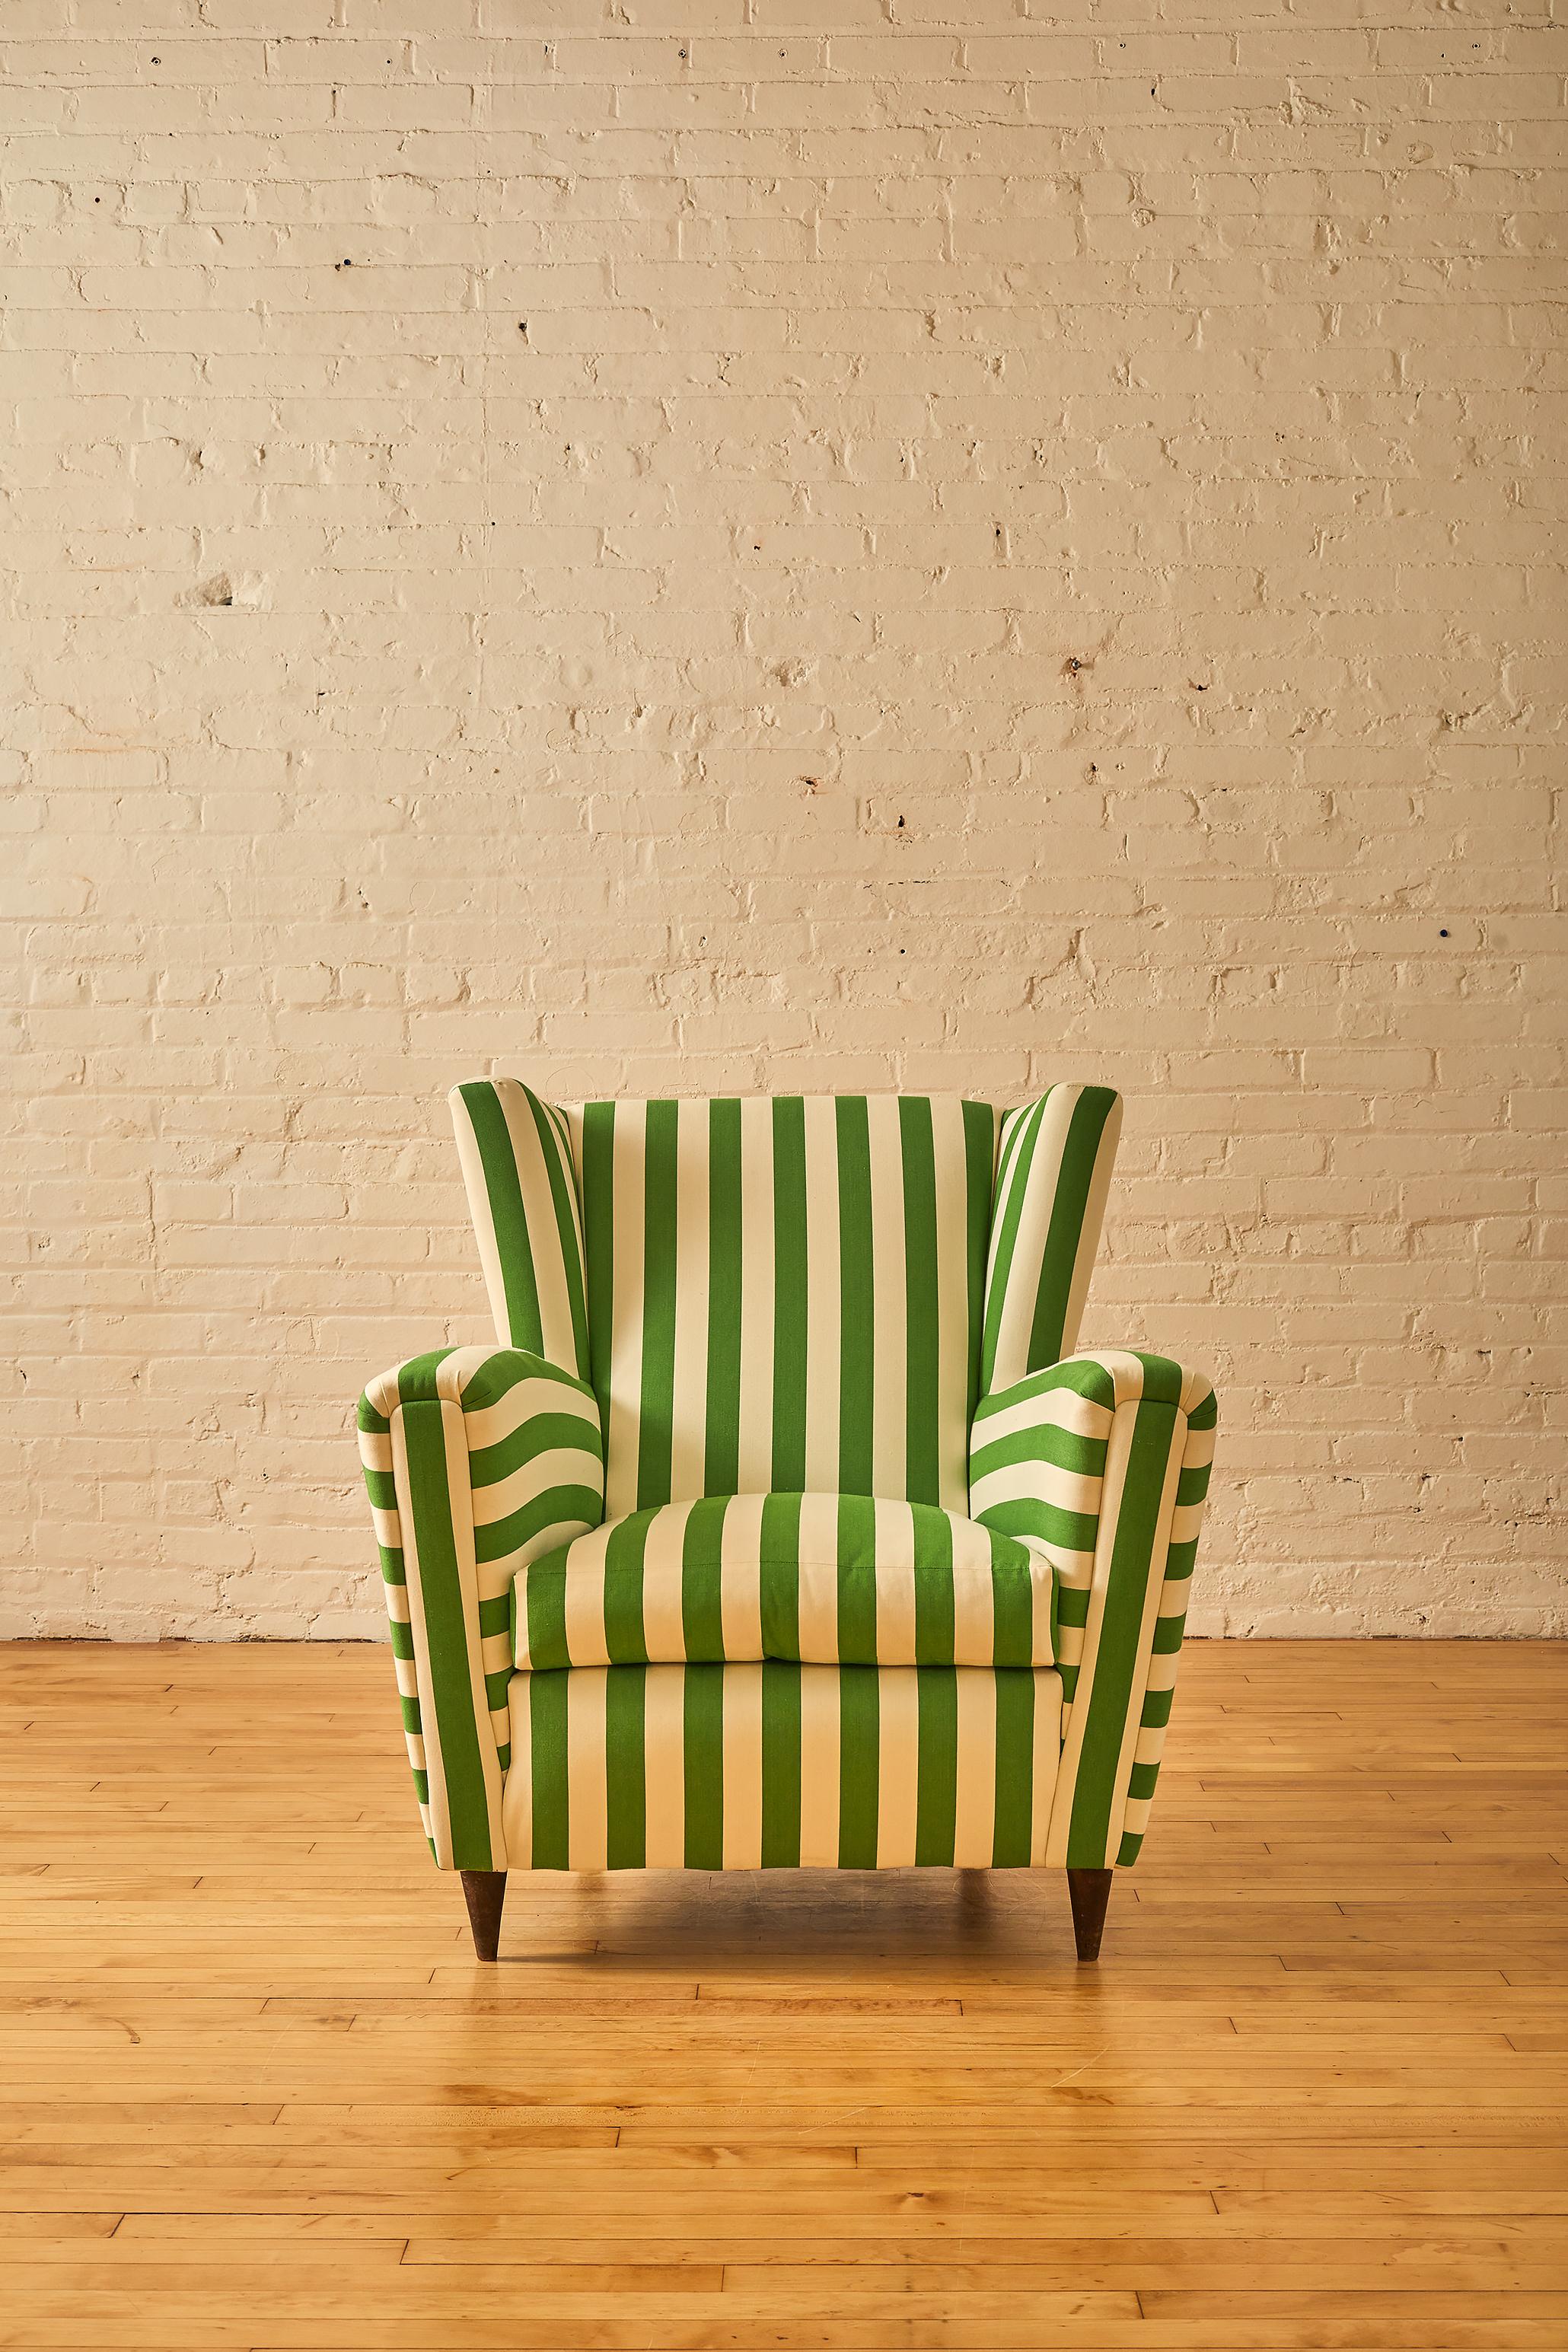 Mid century modern Italian lounge chair.

